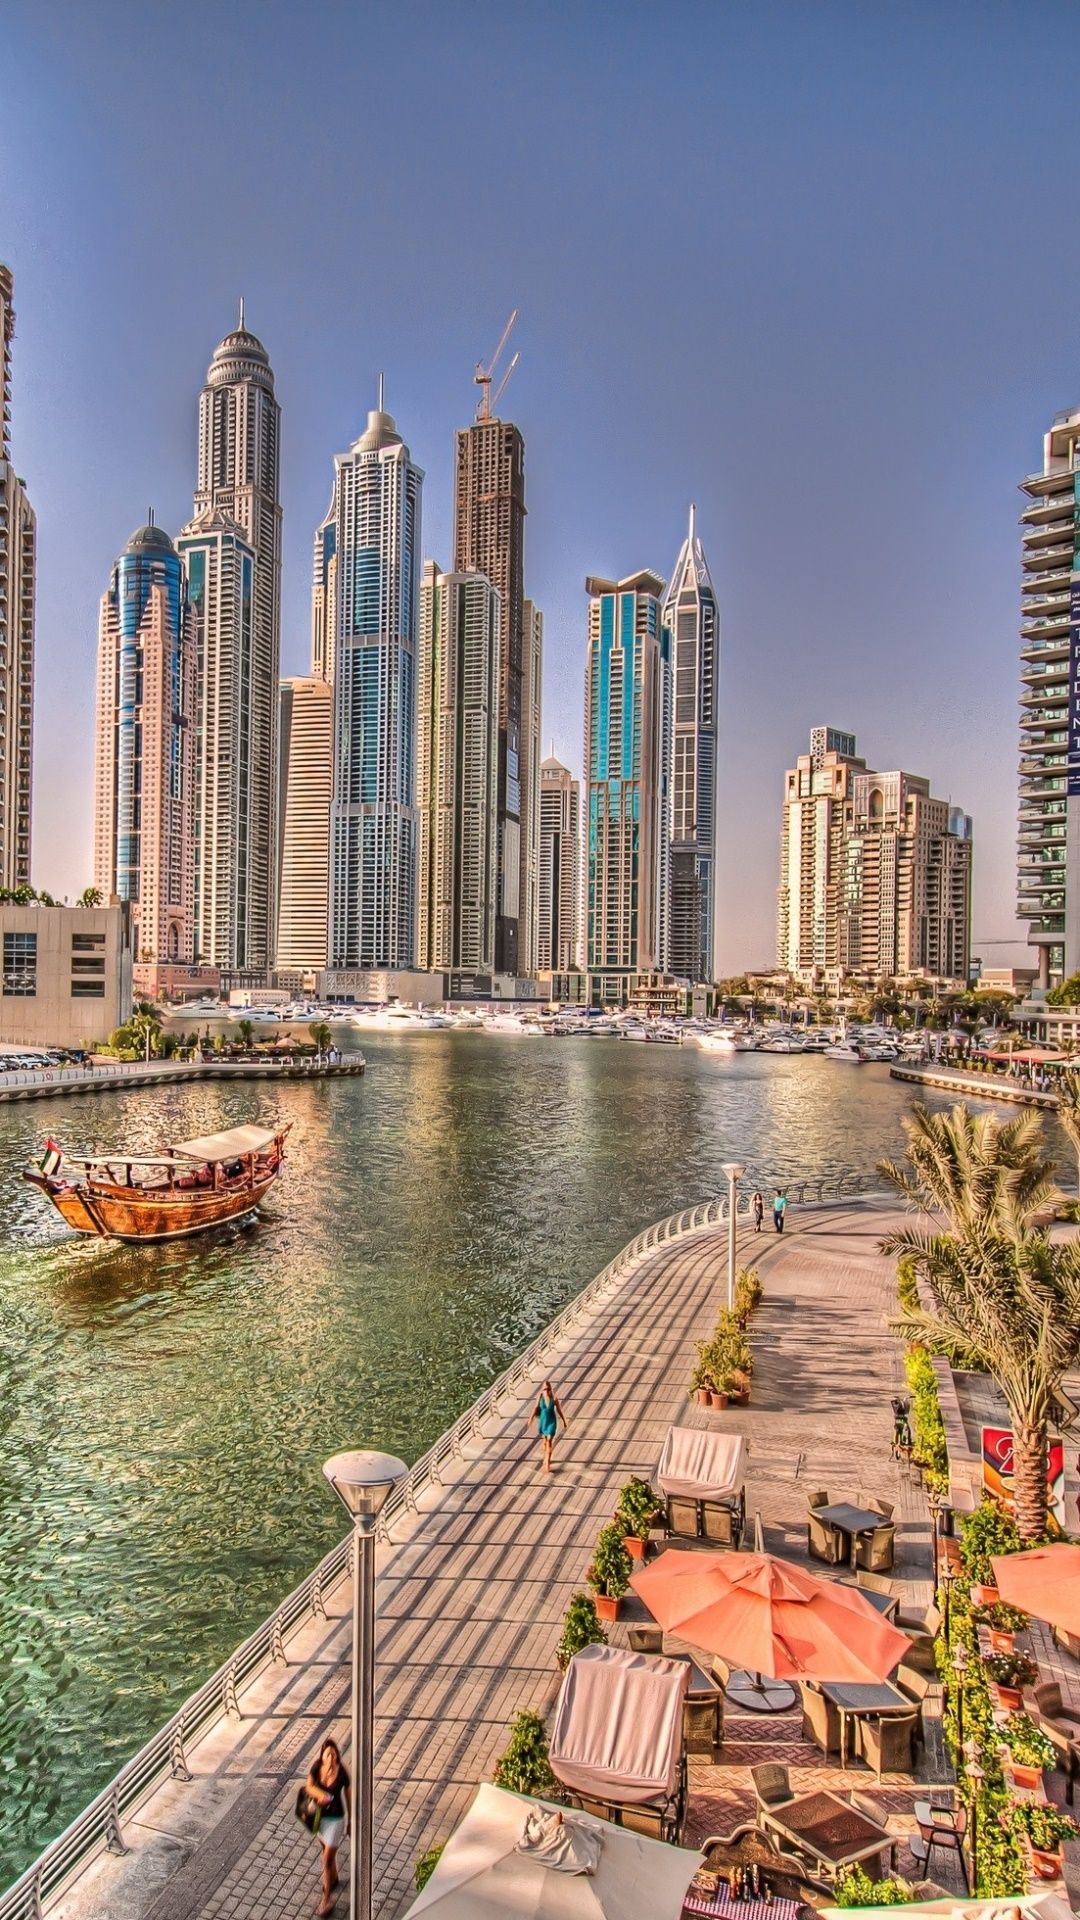  Dubai Hintergrundbild 1080x1920. Dubai phone wallpaper 1080P, 2k, 4k Full HD Wallpaper, Background Free Download